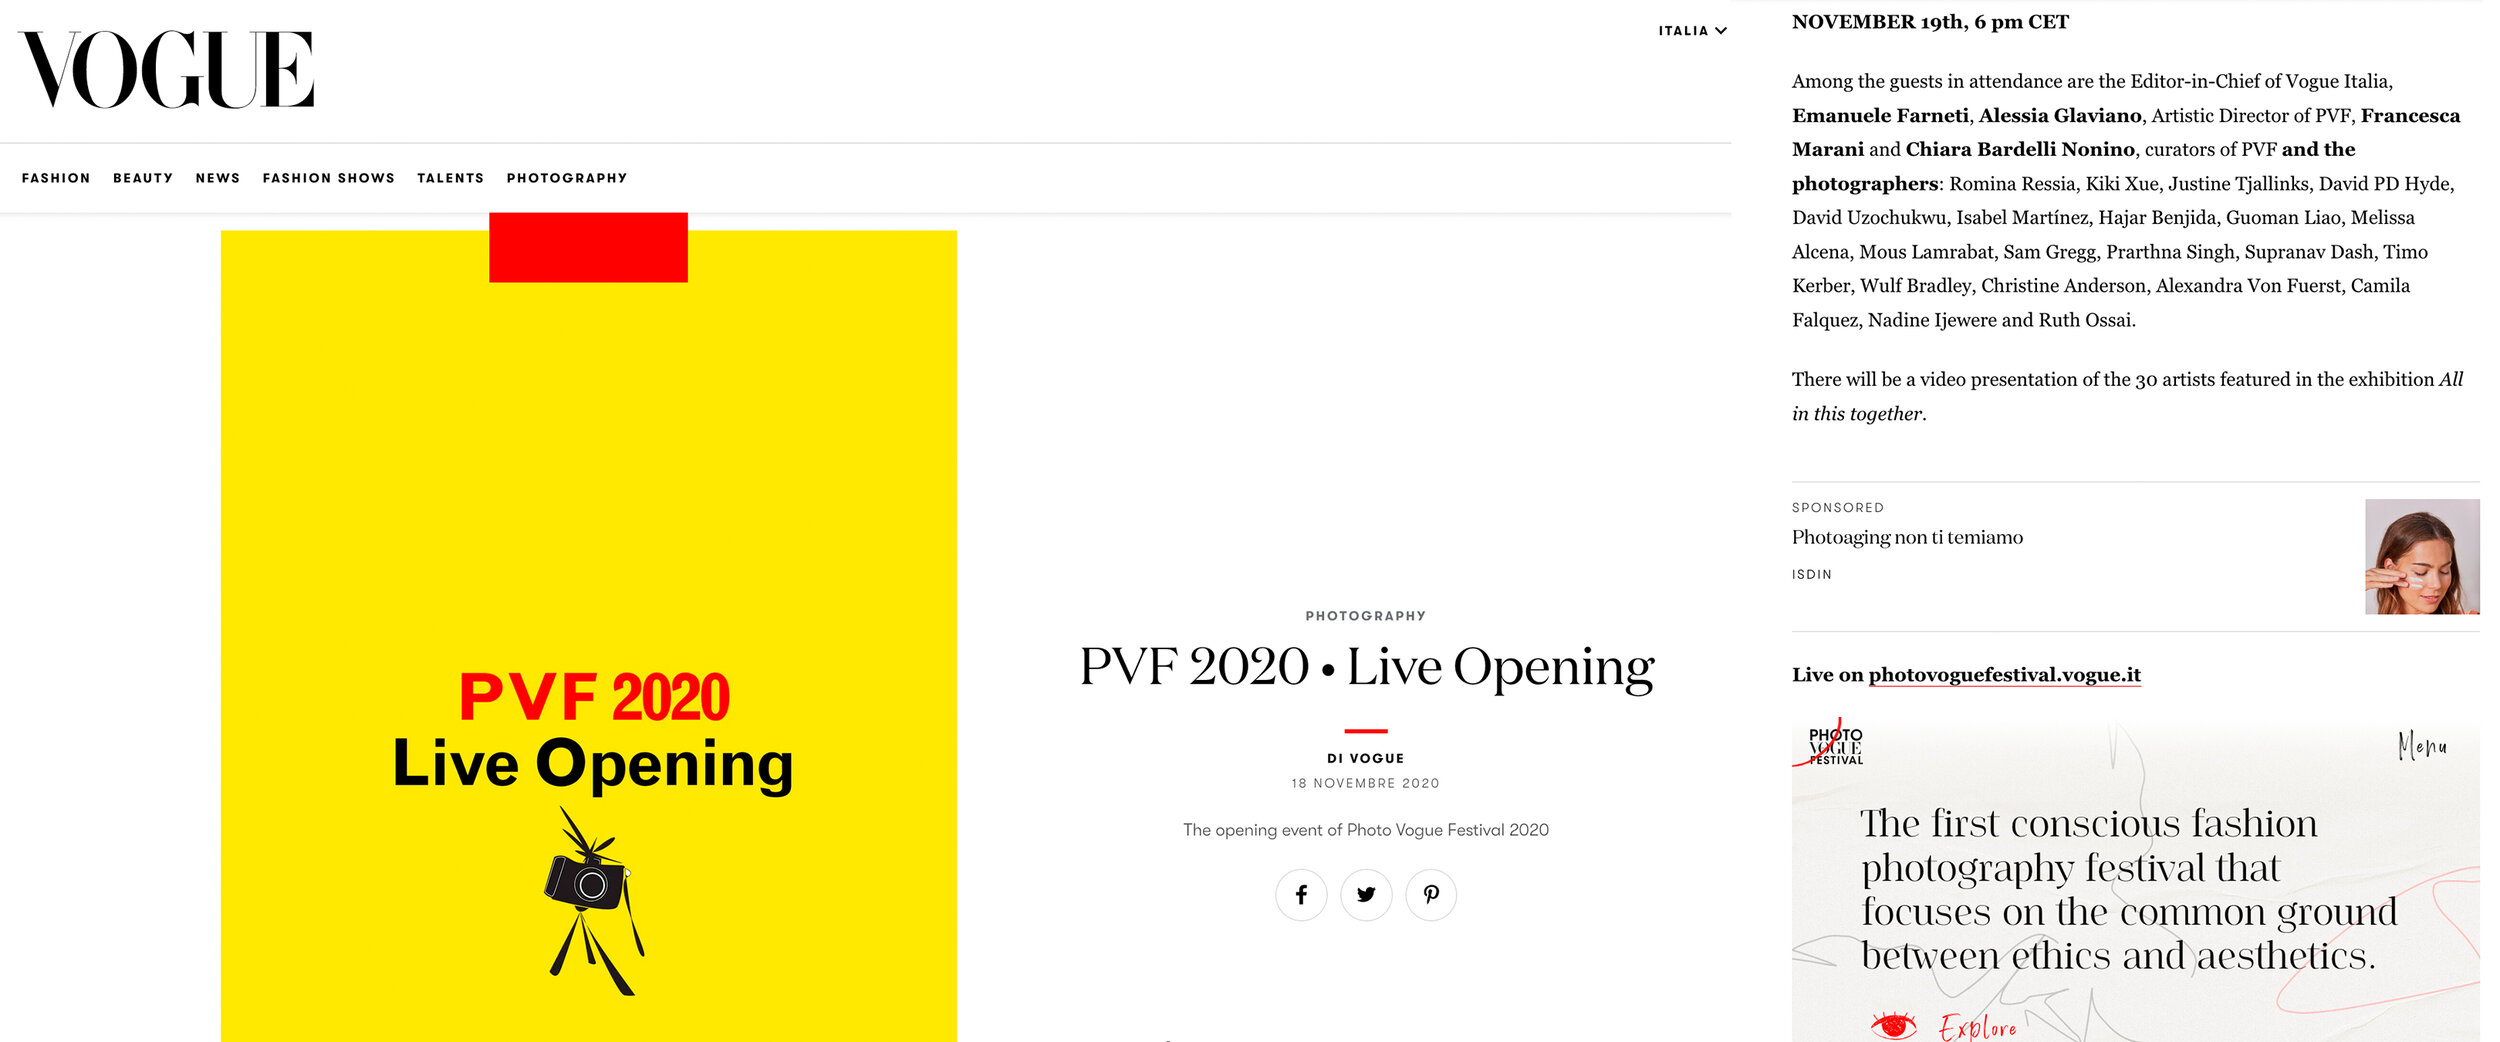 PHV-2020_live-opening.jpg